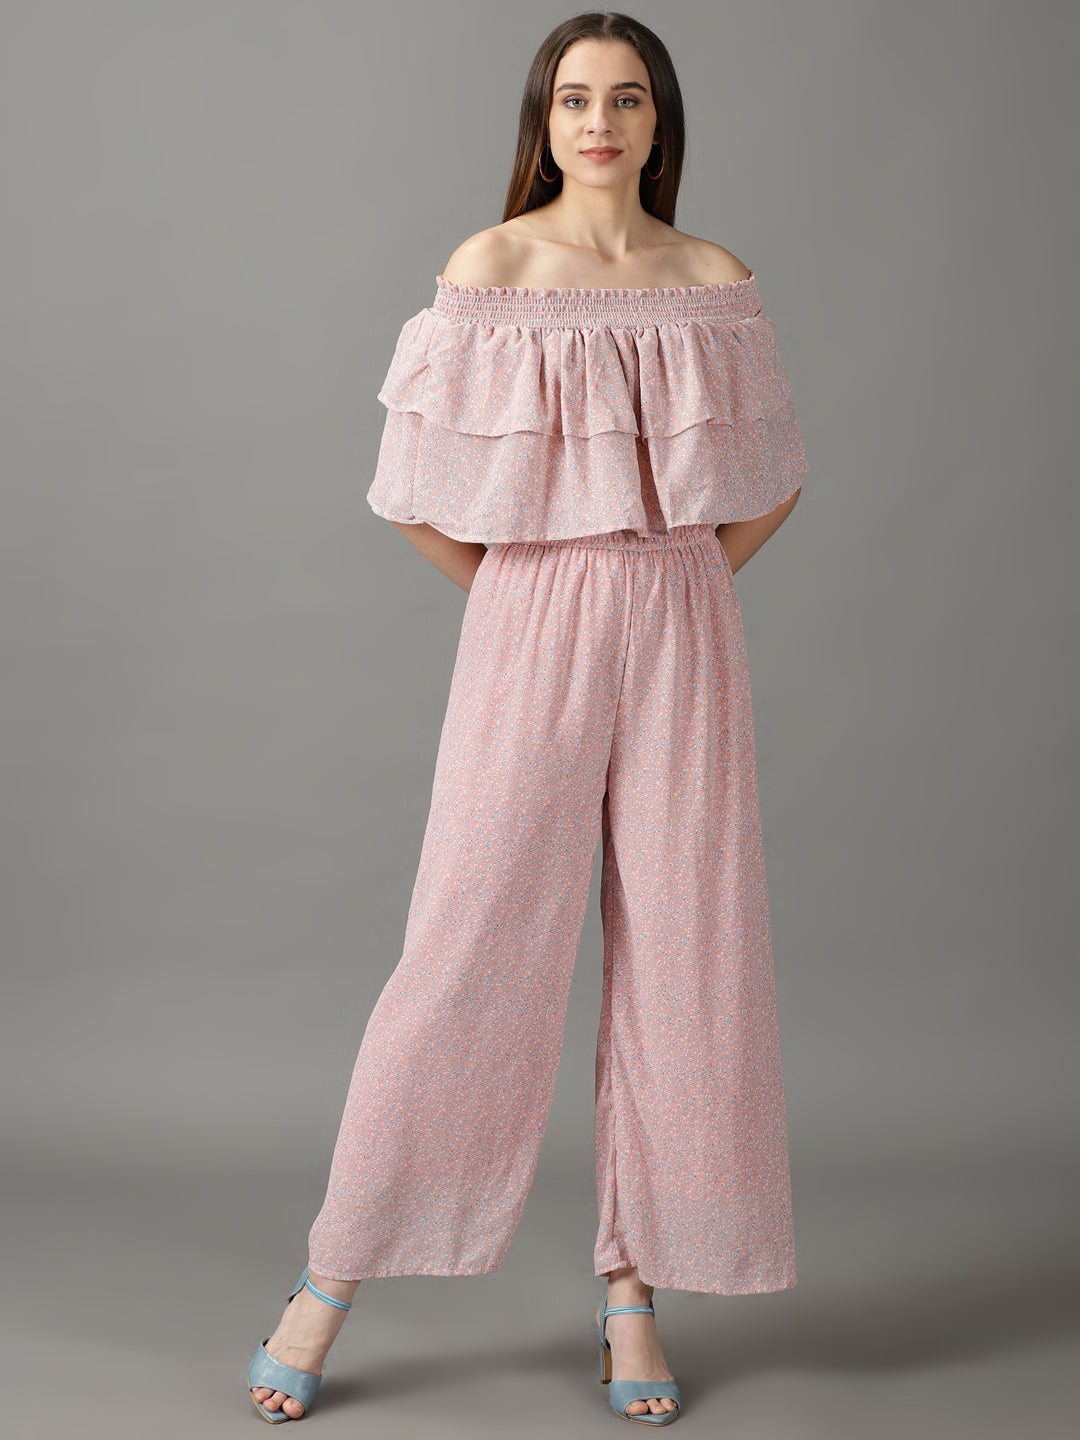 Women's Pink Printed Jumpsuit